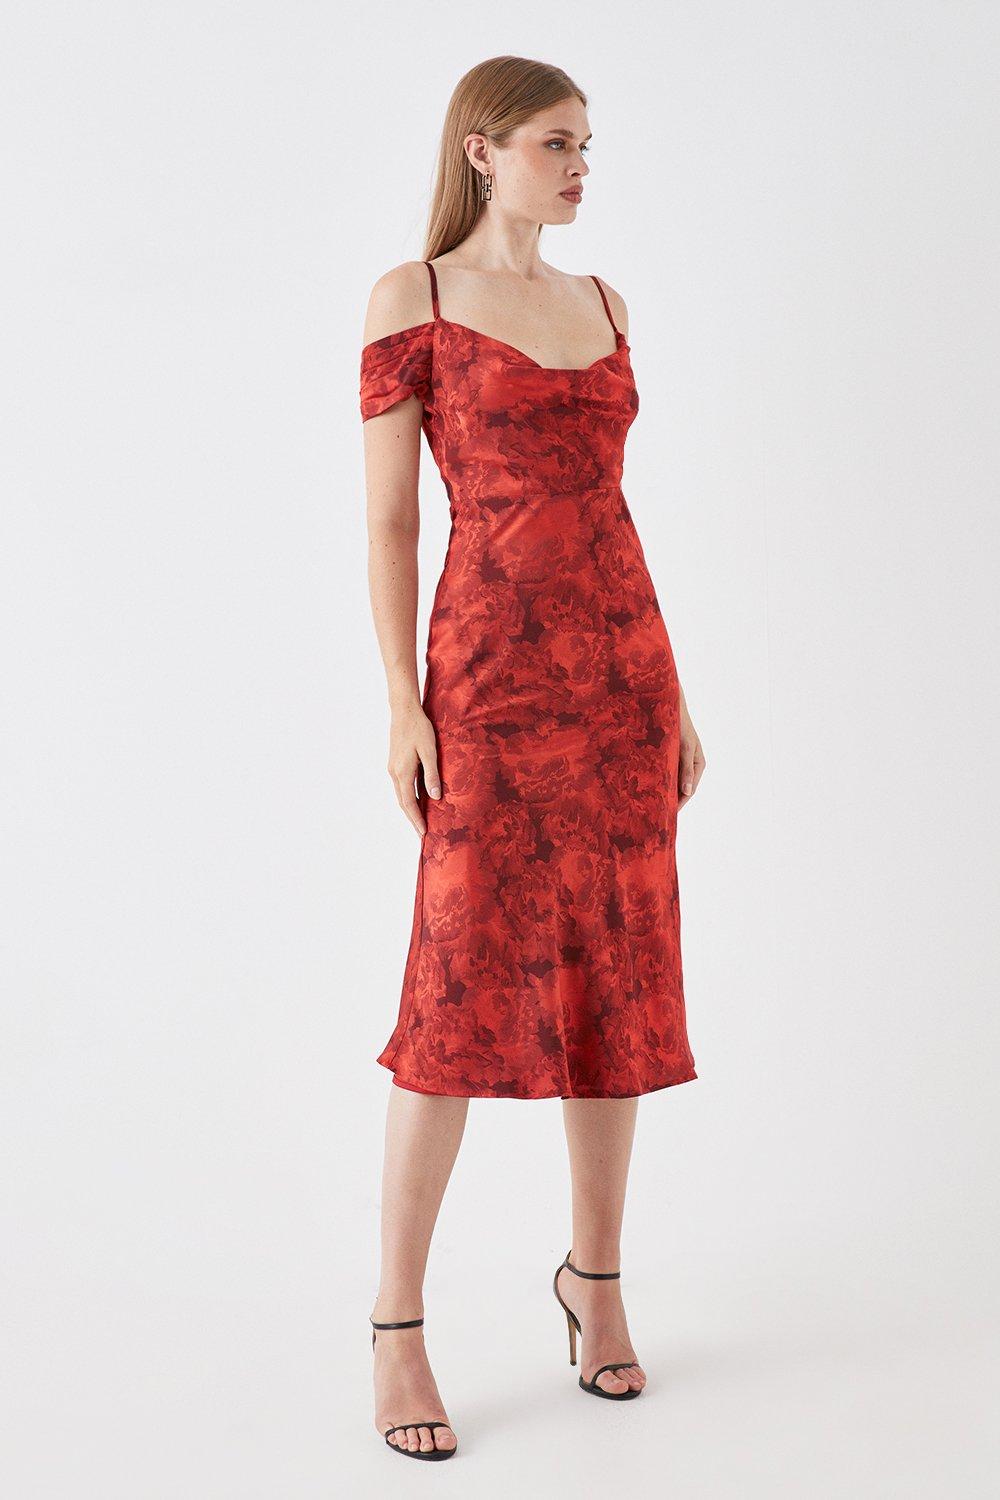 Sophie Habboo Satin Jacquard Drape Sleeve Midi Dress - Red